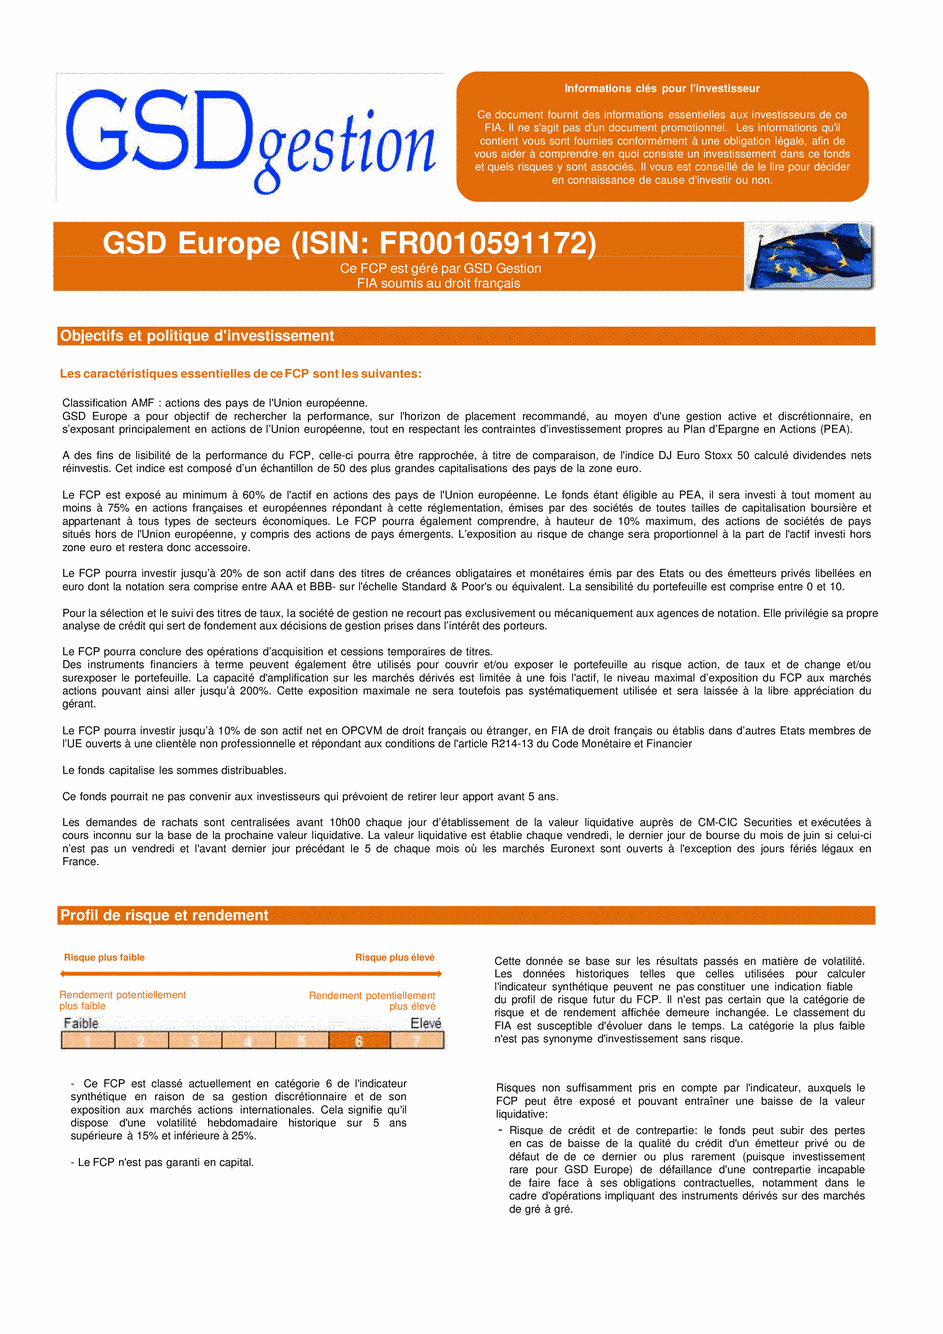 DICI-Prospectus Complet GSD Europe - 17/12/2014 - Français